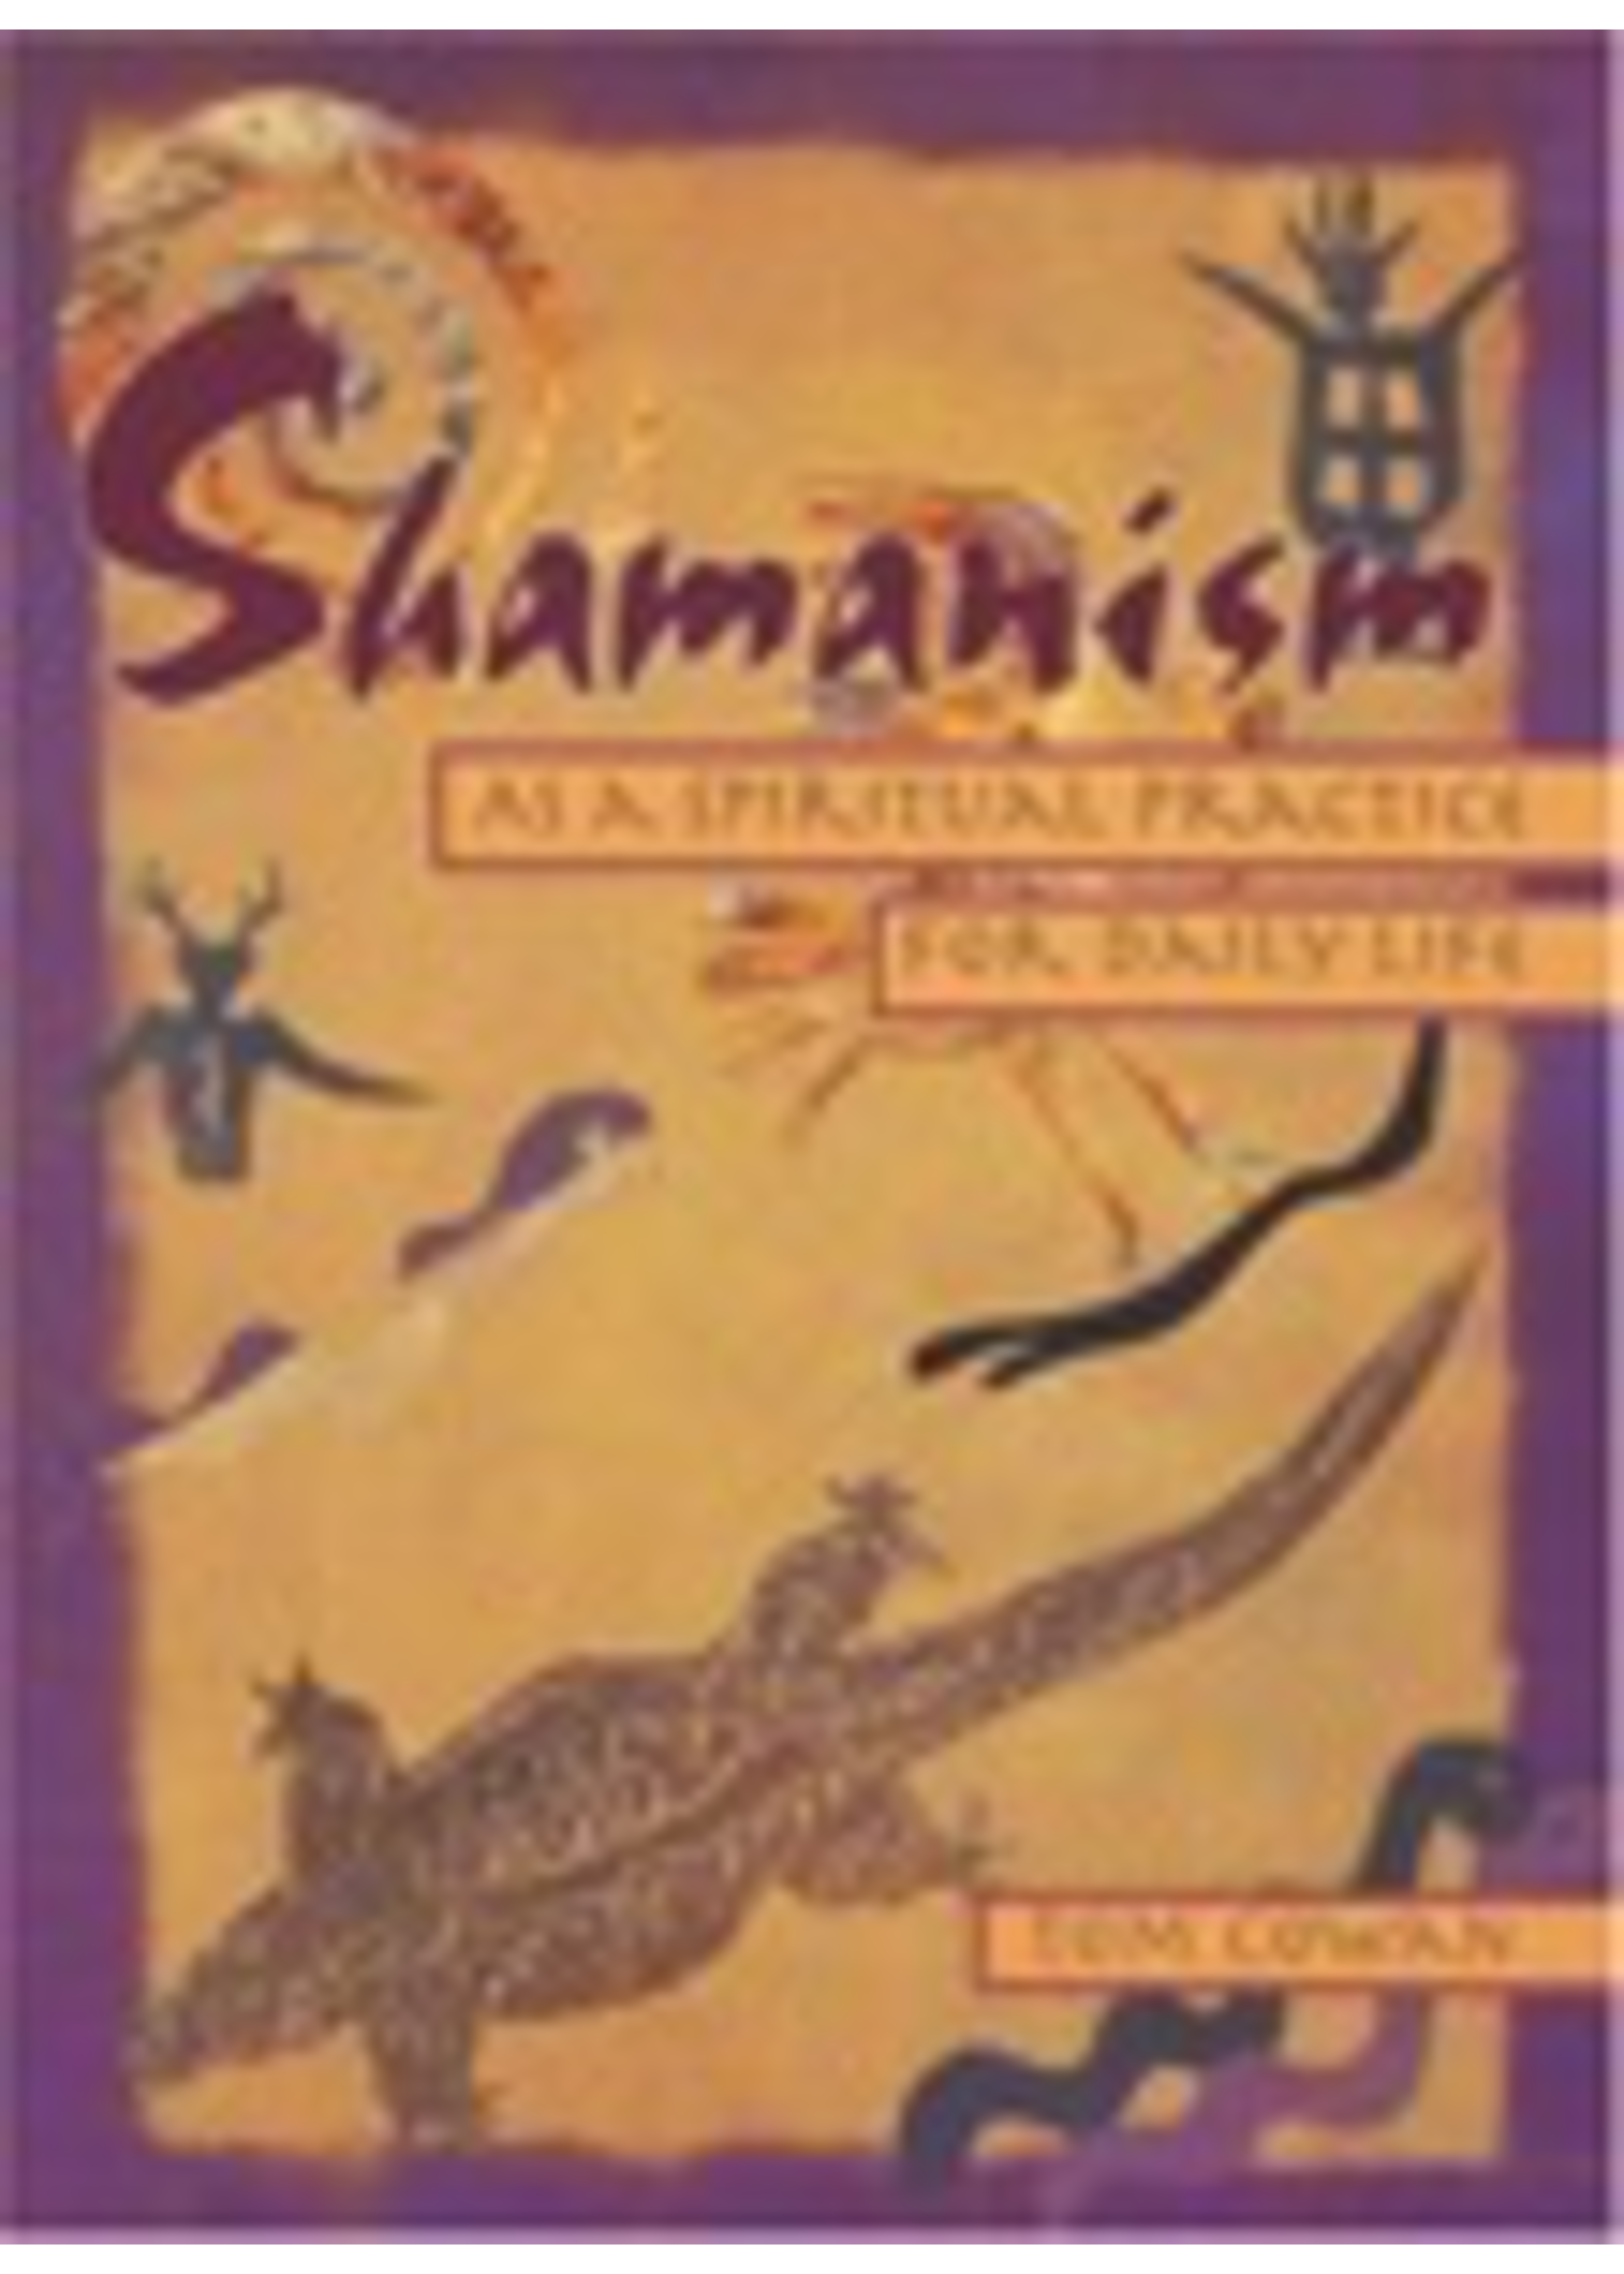 Shamanism as a Spiritual Practice